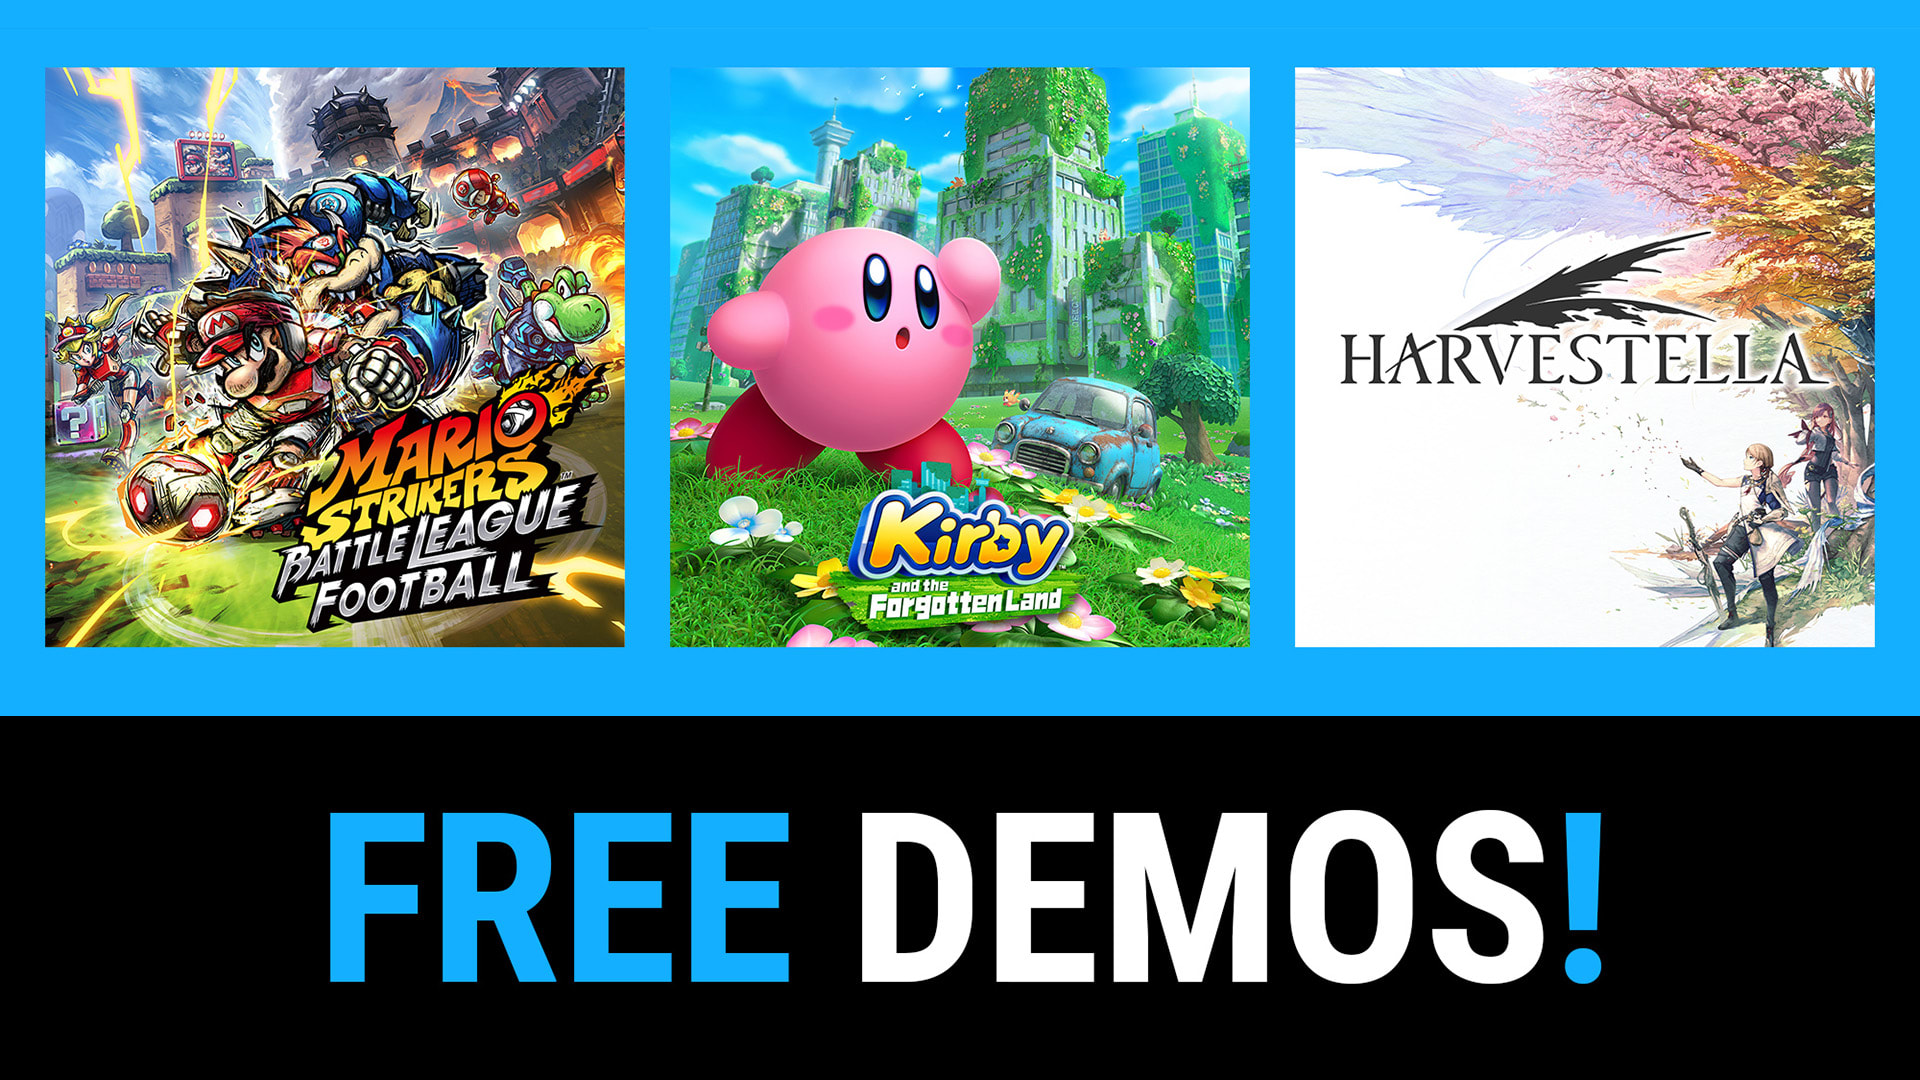 Play free gaming demos